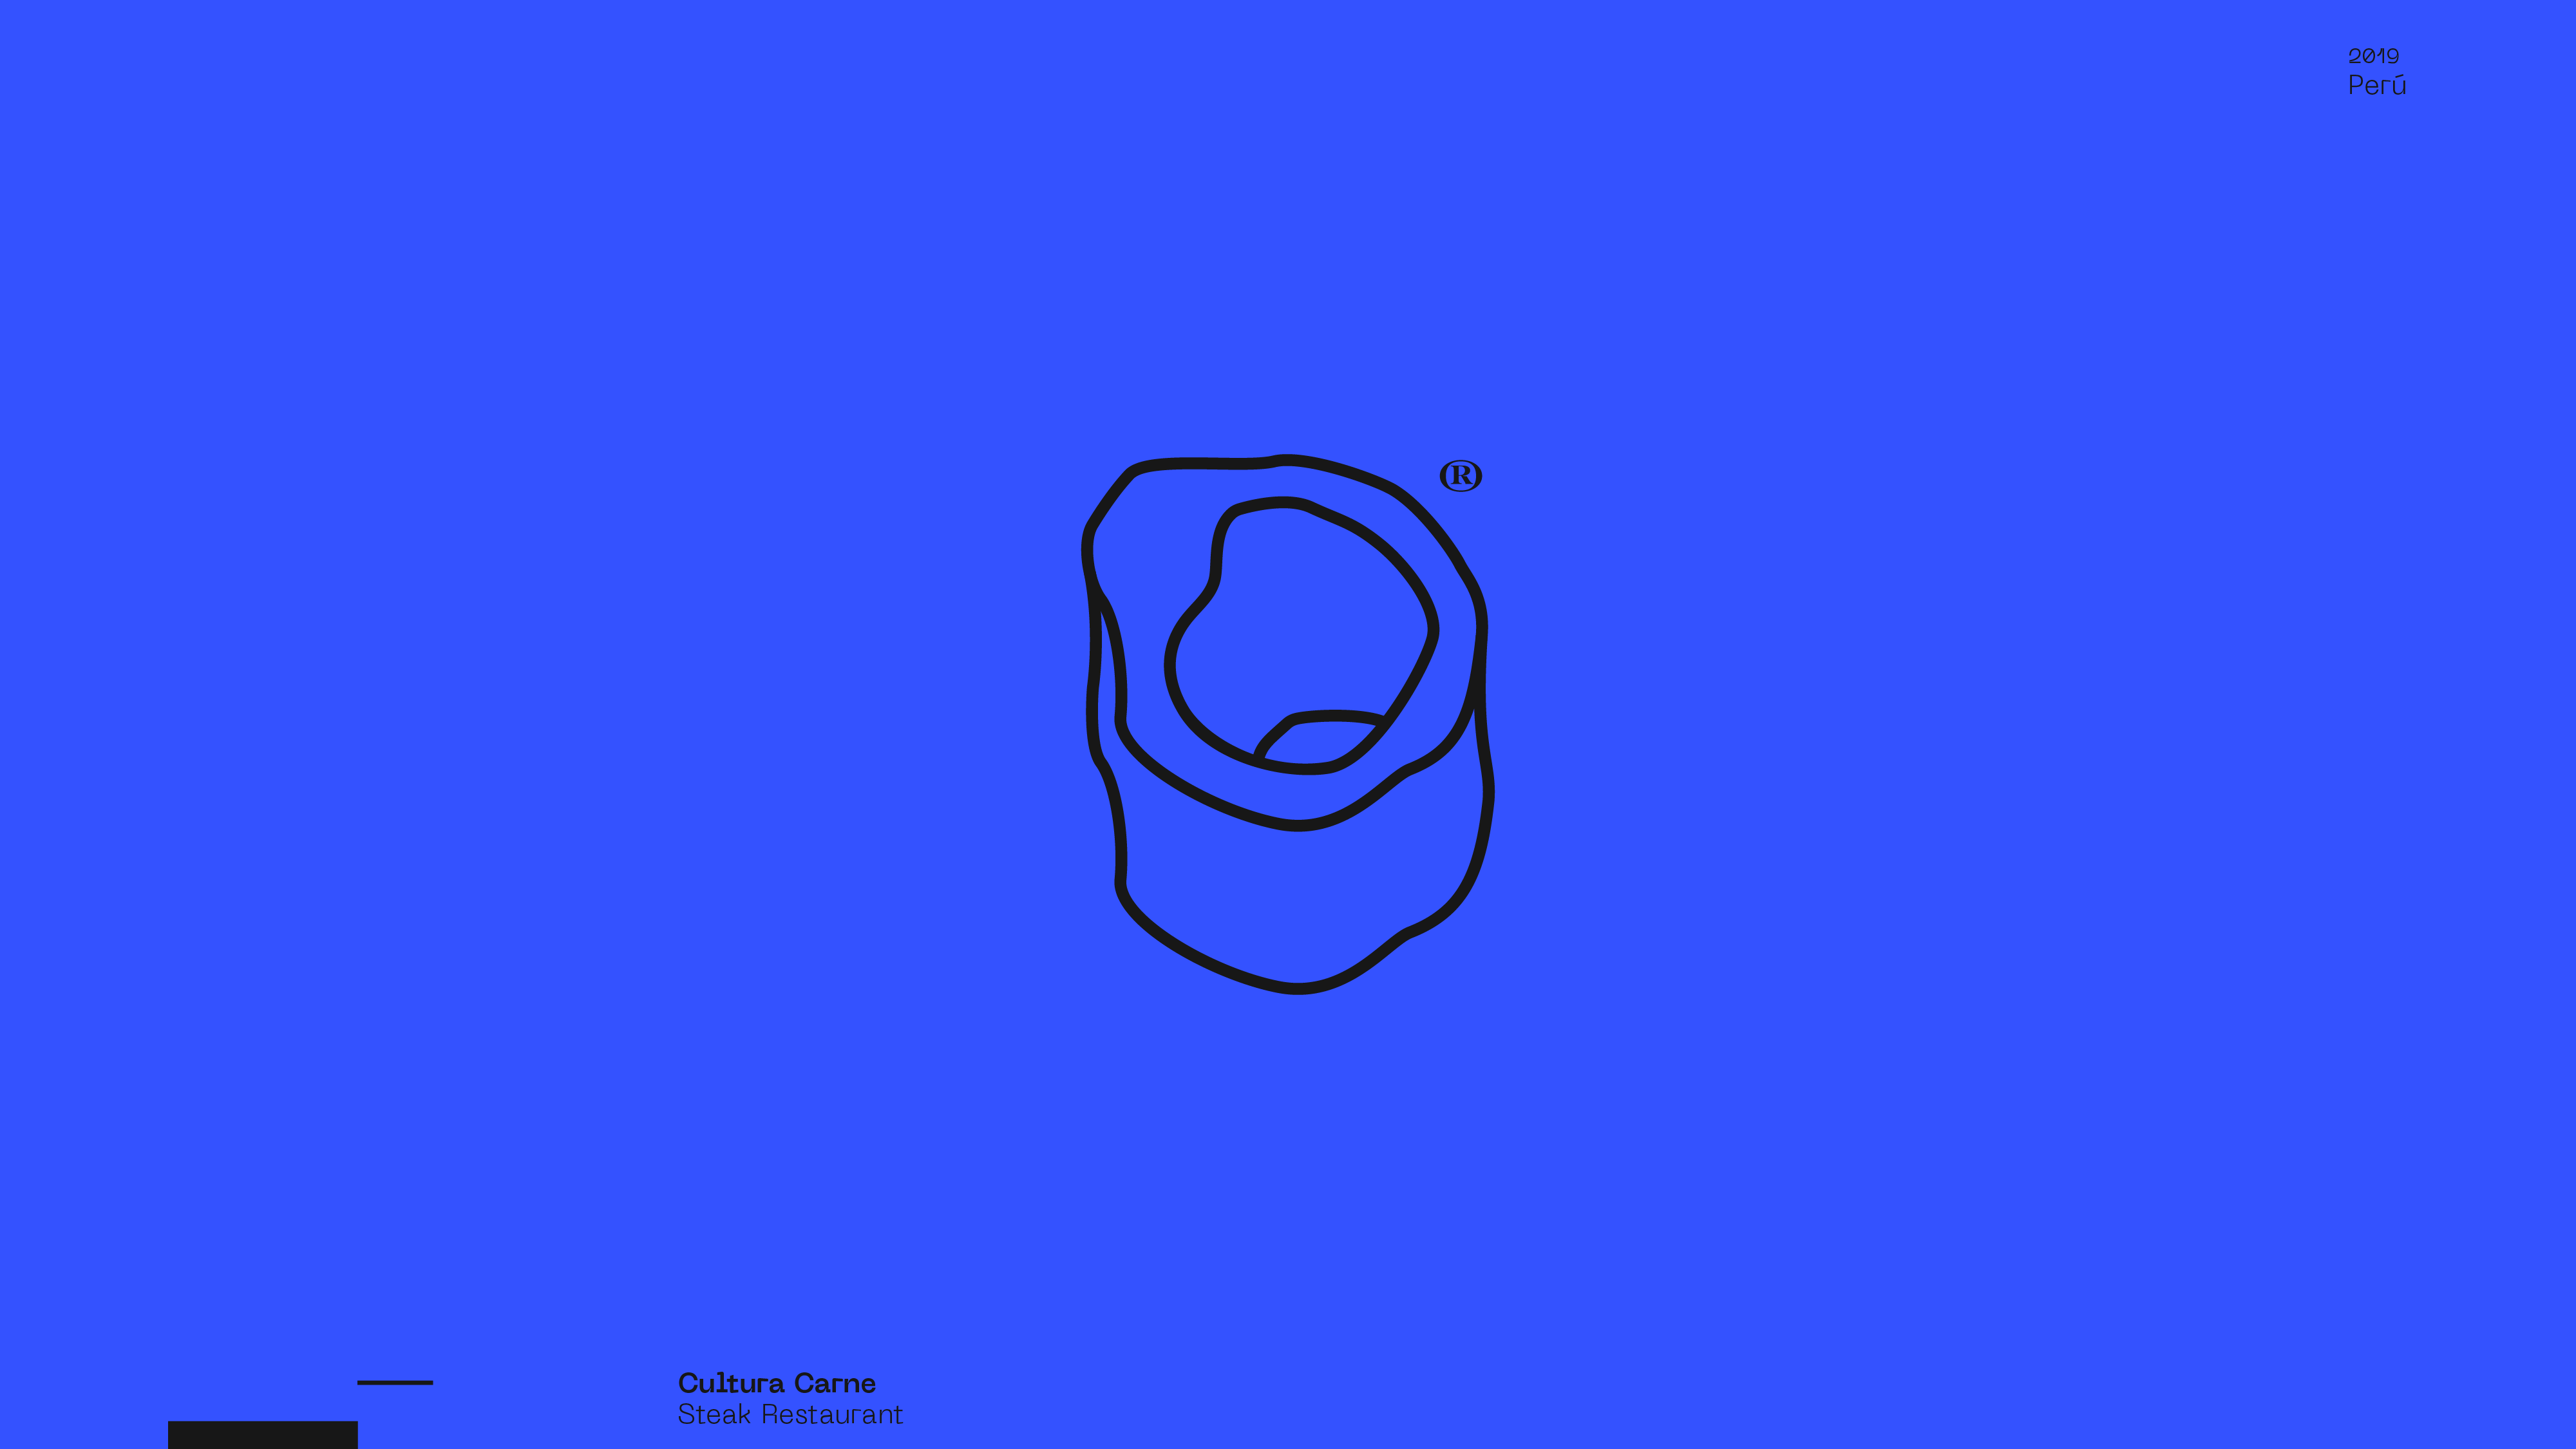 Guapo Design Studio by Esteban Ibarra Logofolio 2019 logo designer — Cultura Carne